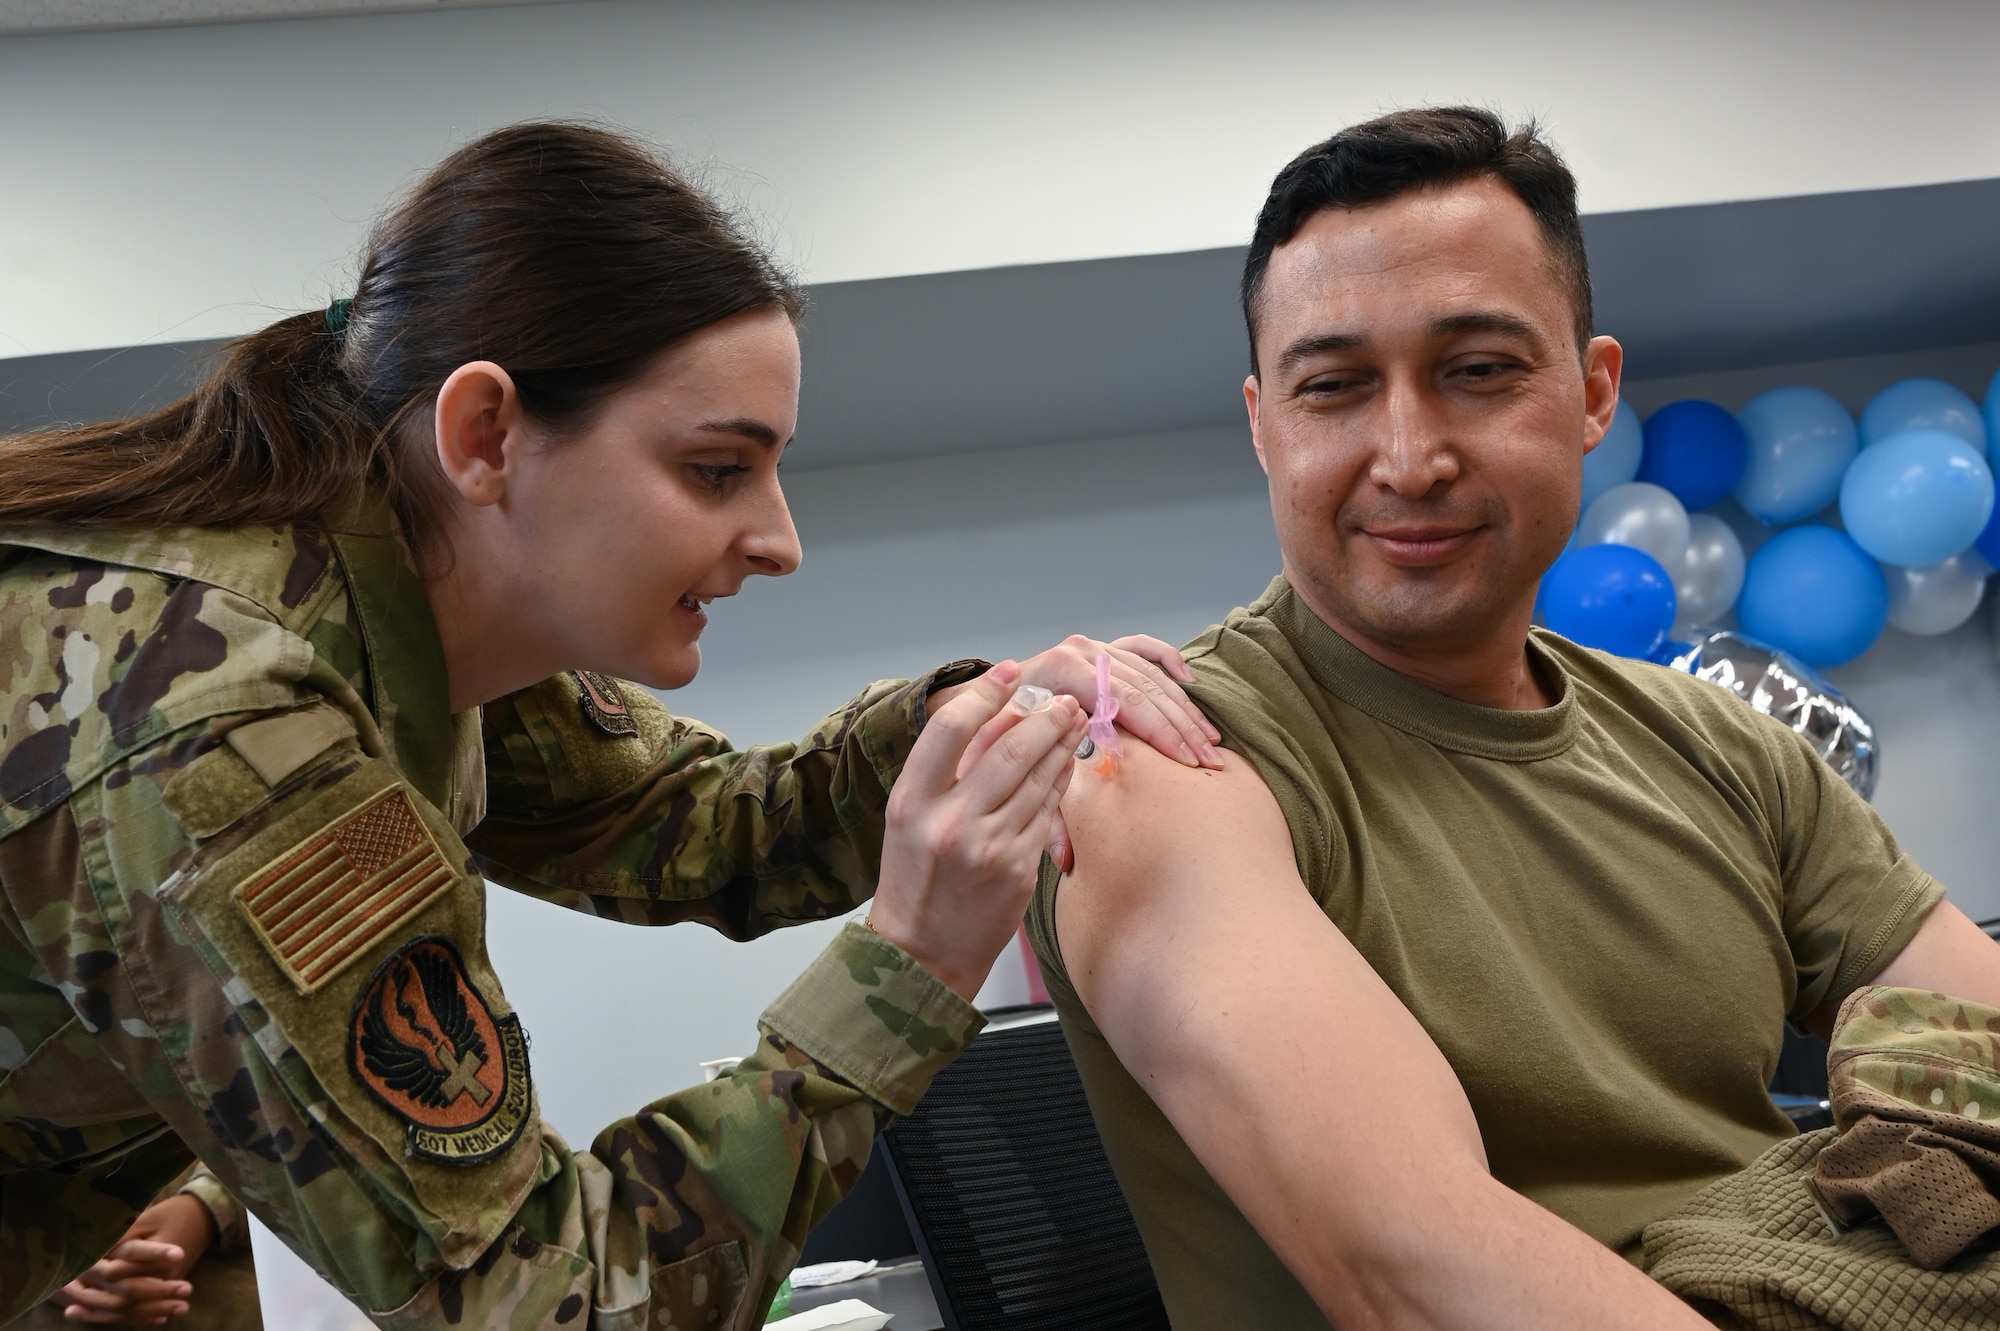 Airman getting vaccine